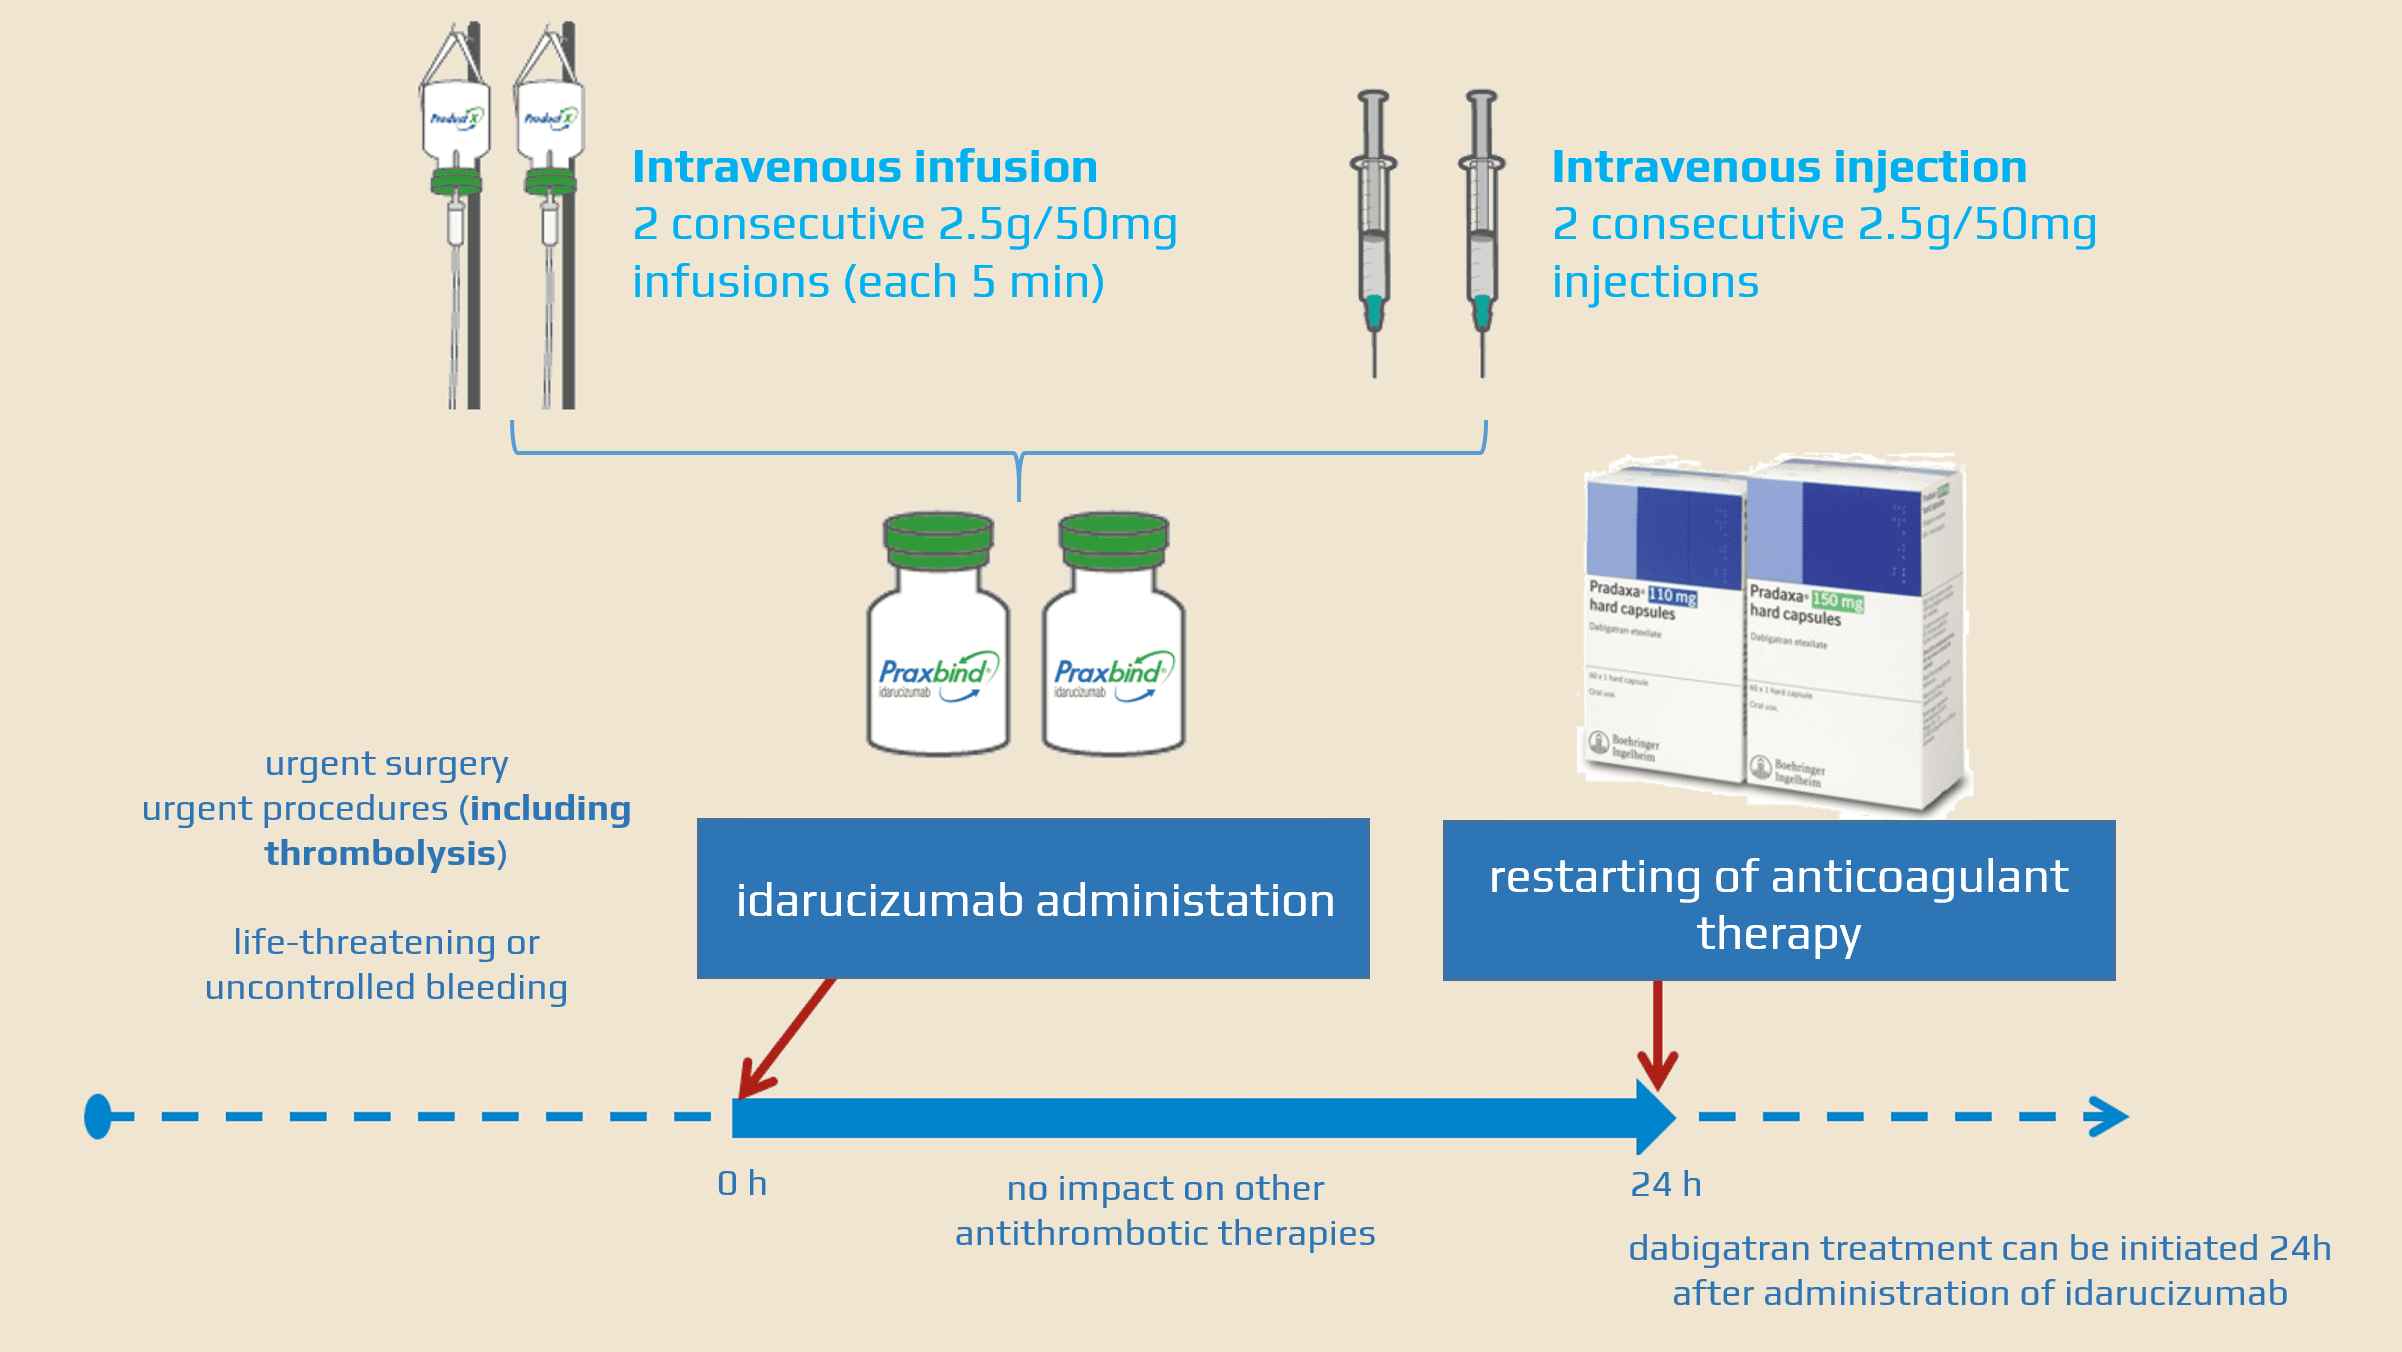 Idarucizumab (PRAXBIND) administration